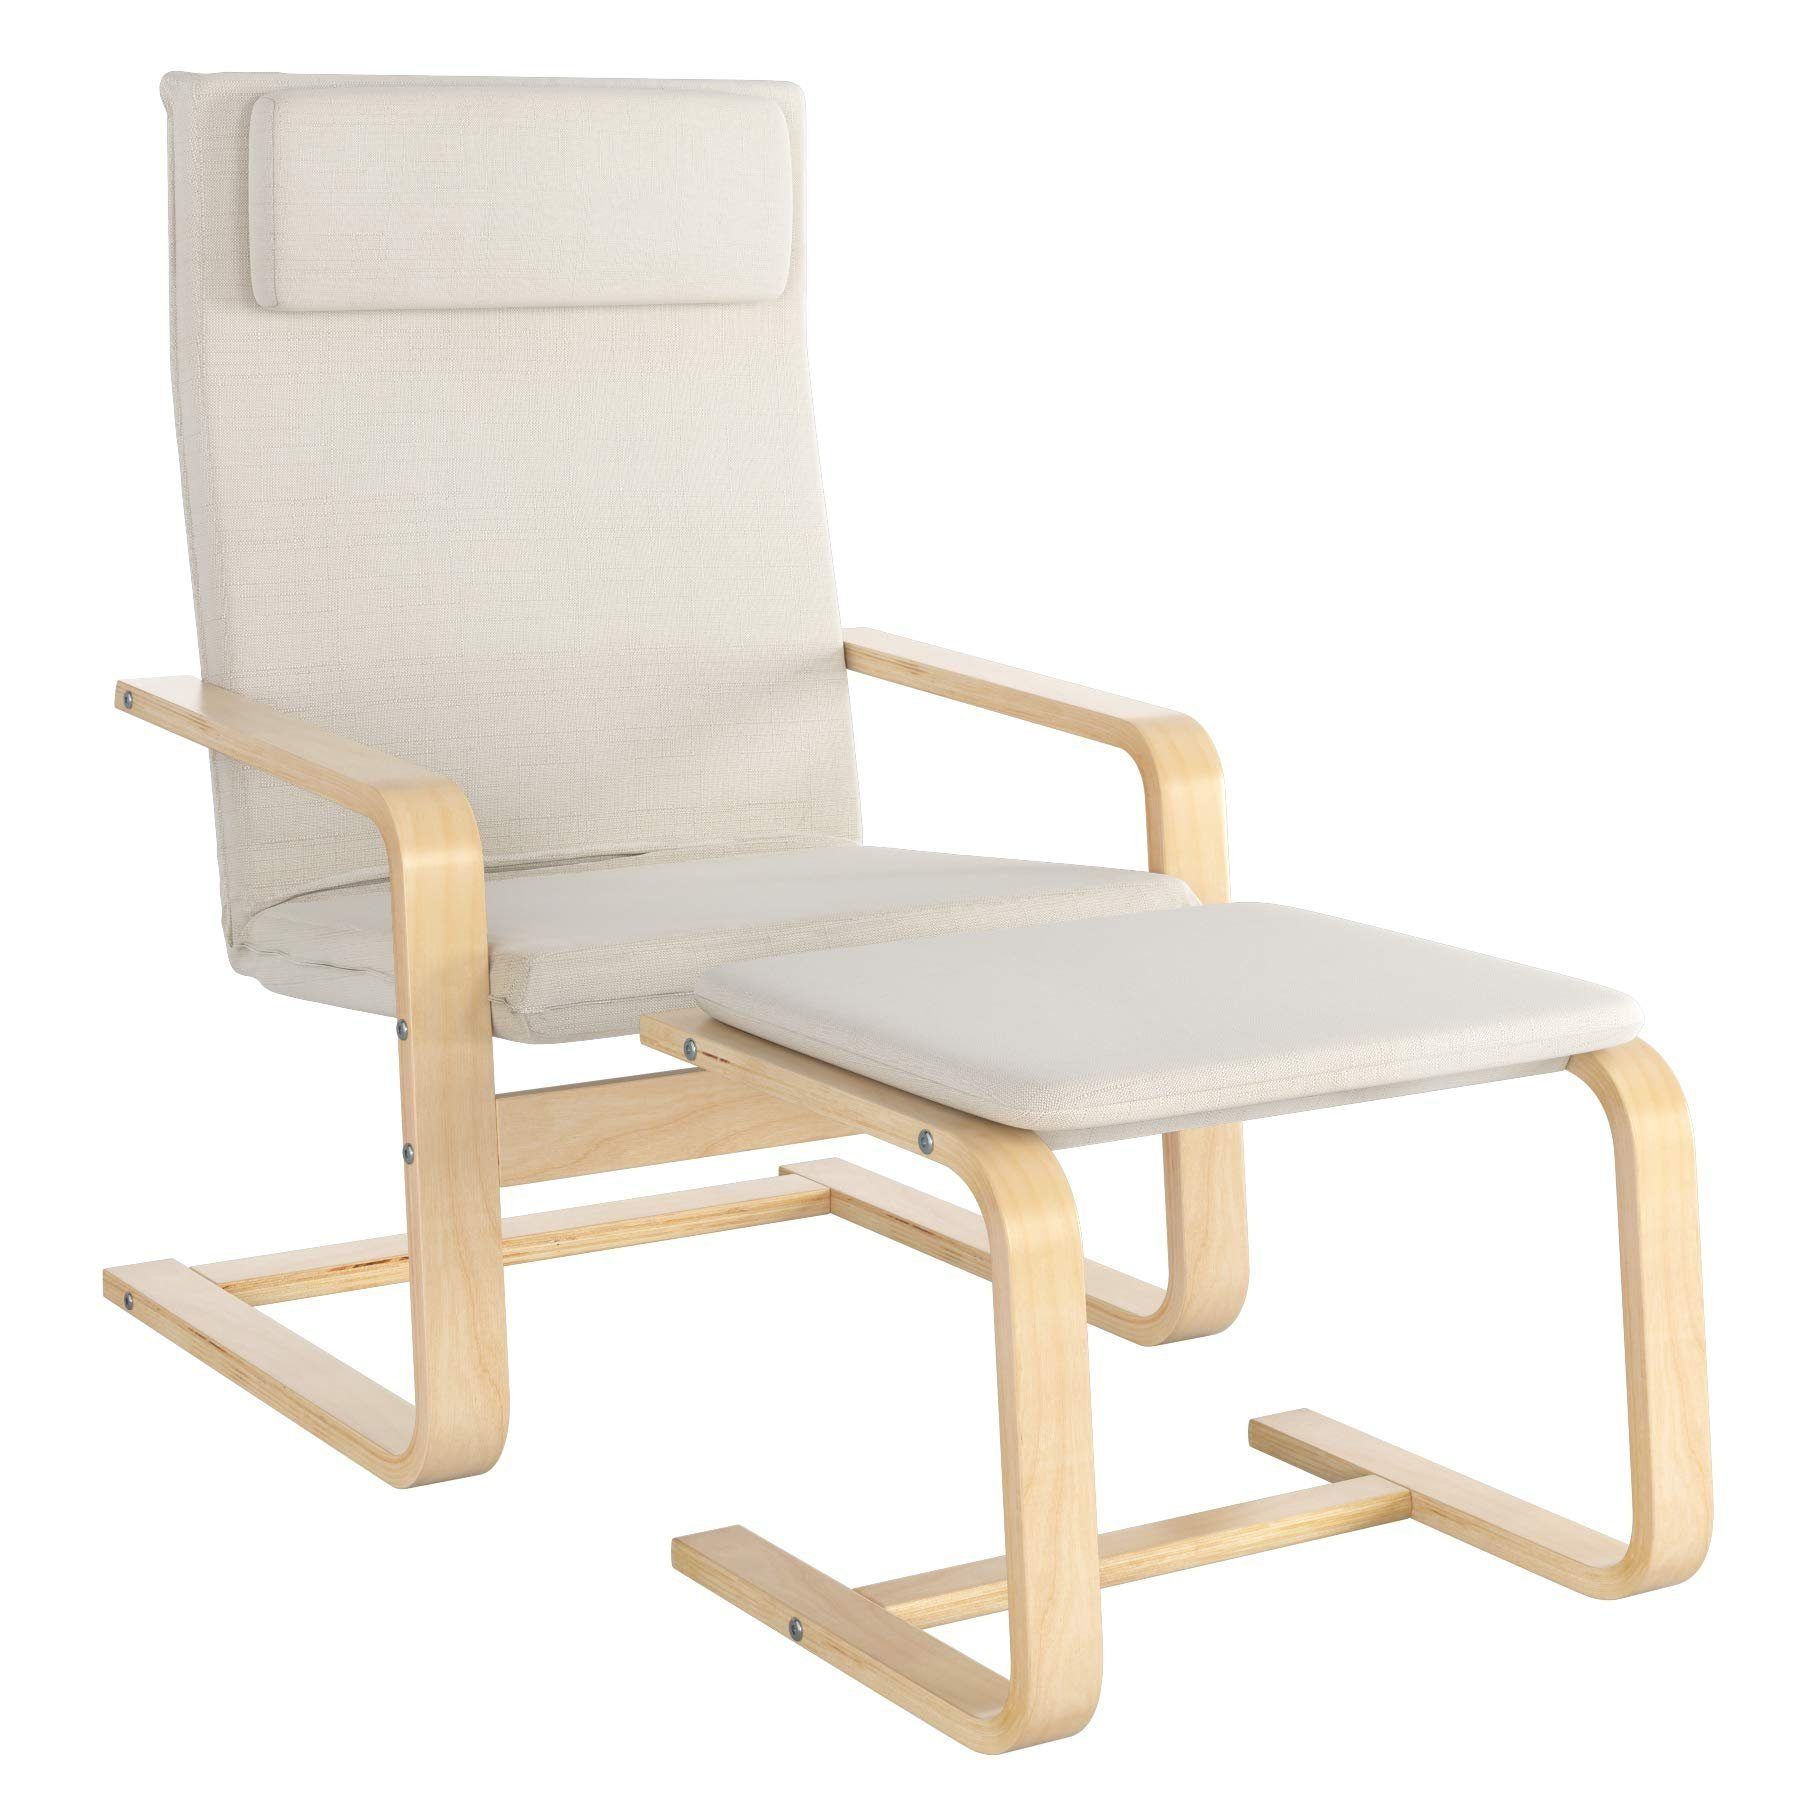 Daskoo Relaxsessel Relaxstuhl mit Fußhocker und Armlehne,66.5x69x96.5 cm (Relaxsessel mit hocker), Sessel Armlehnensessel aus Birkenholz Weiß | Kindersessel